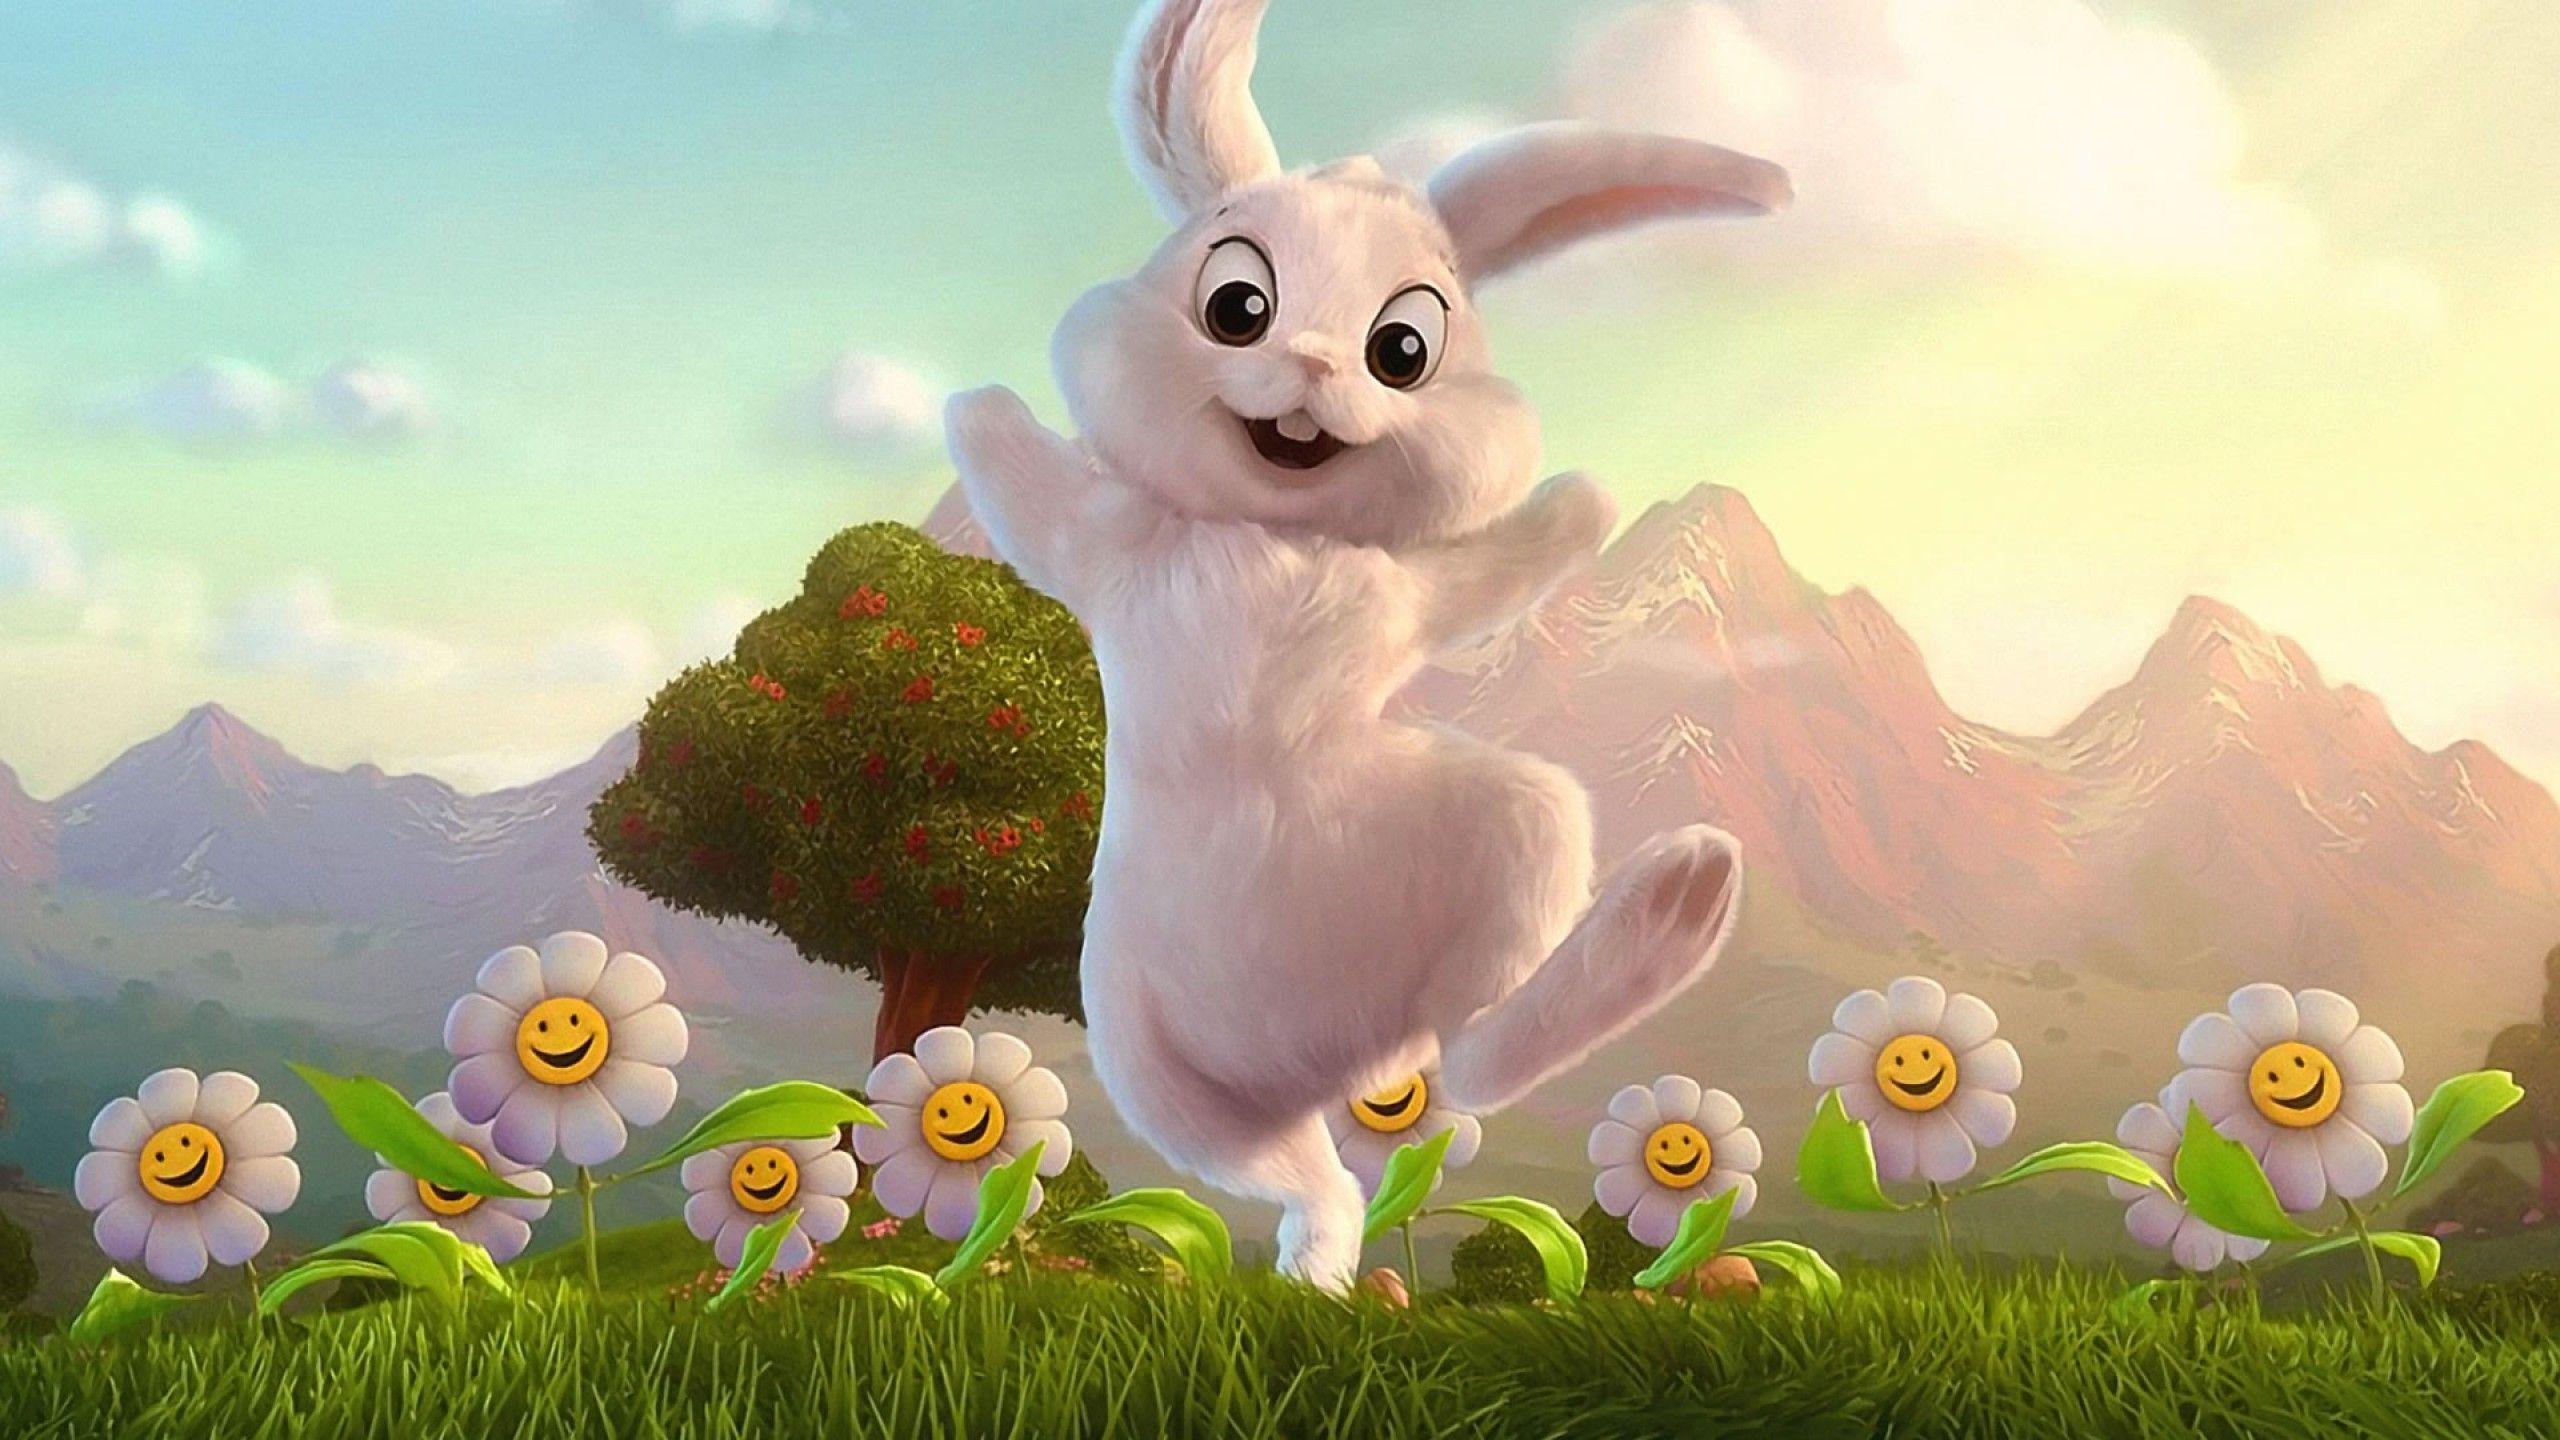 Cute Bugs Bunny White Rabbit Cartoon Wallpaper for Desktop